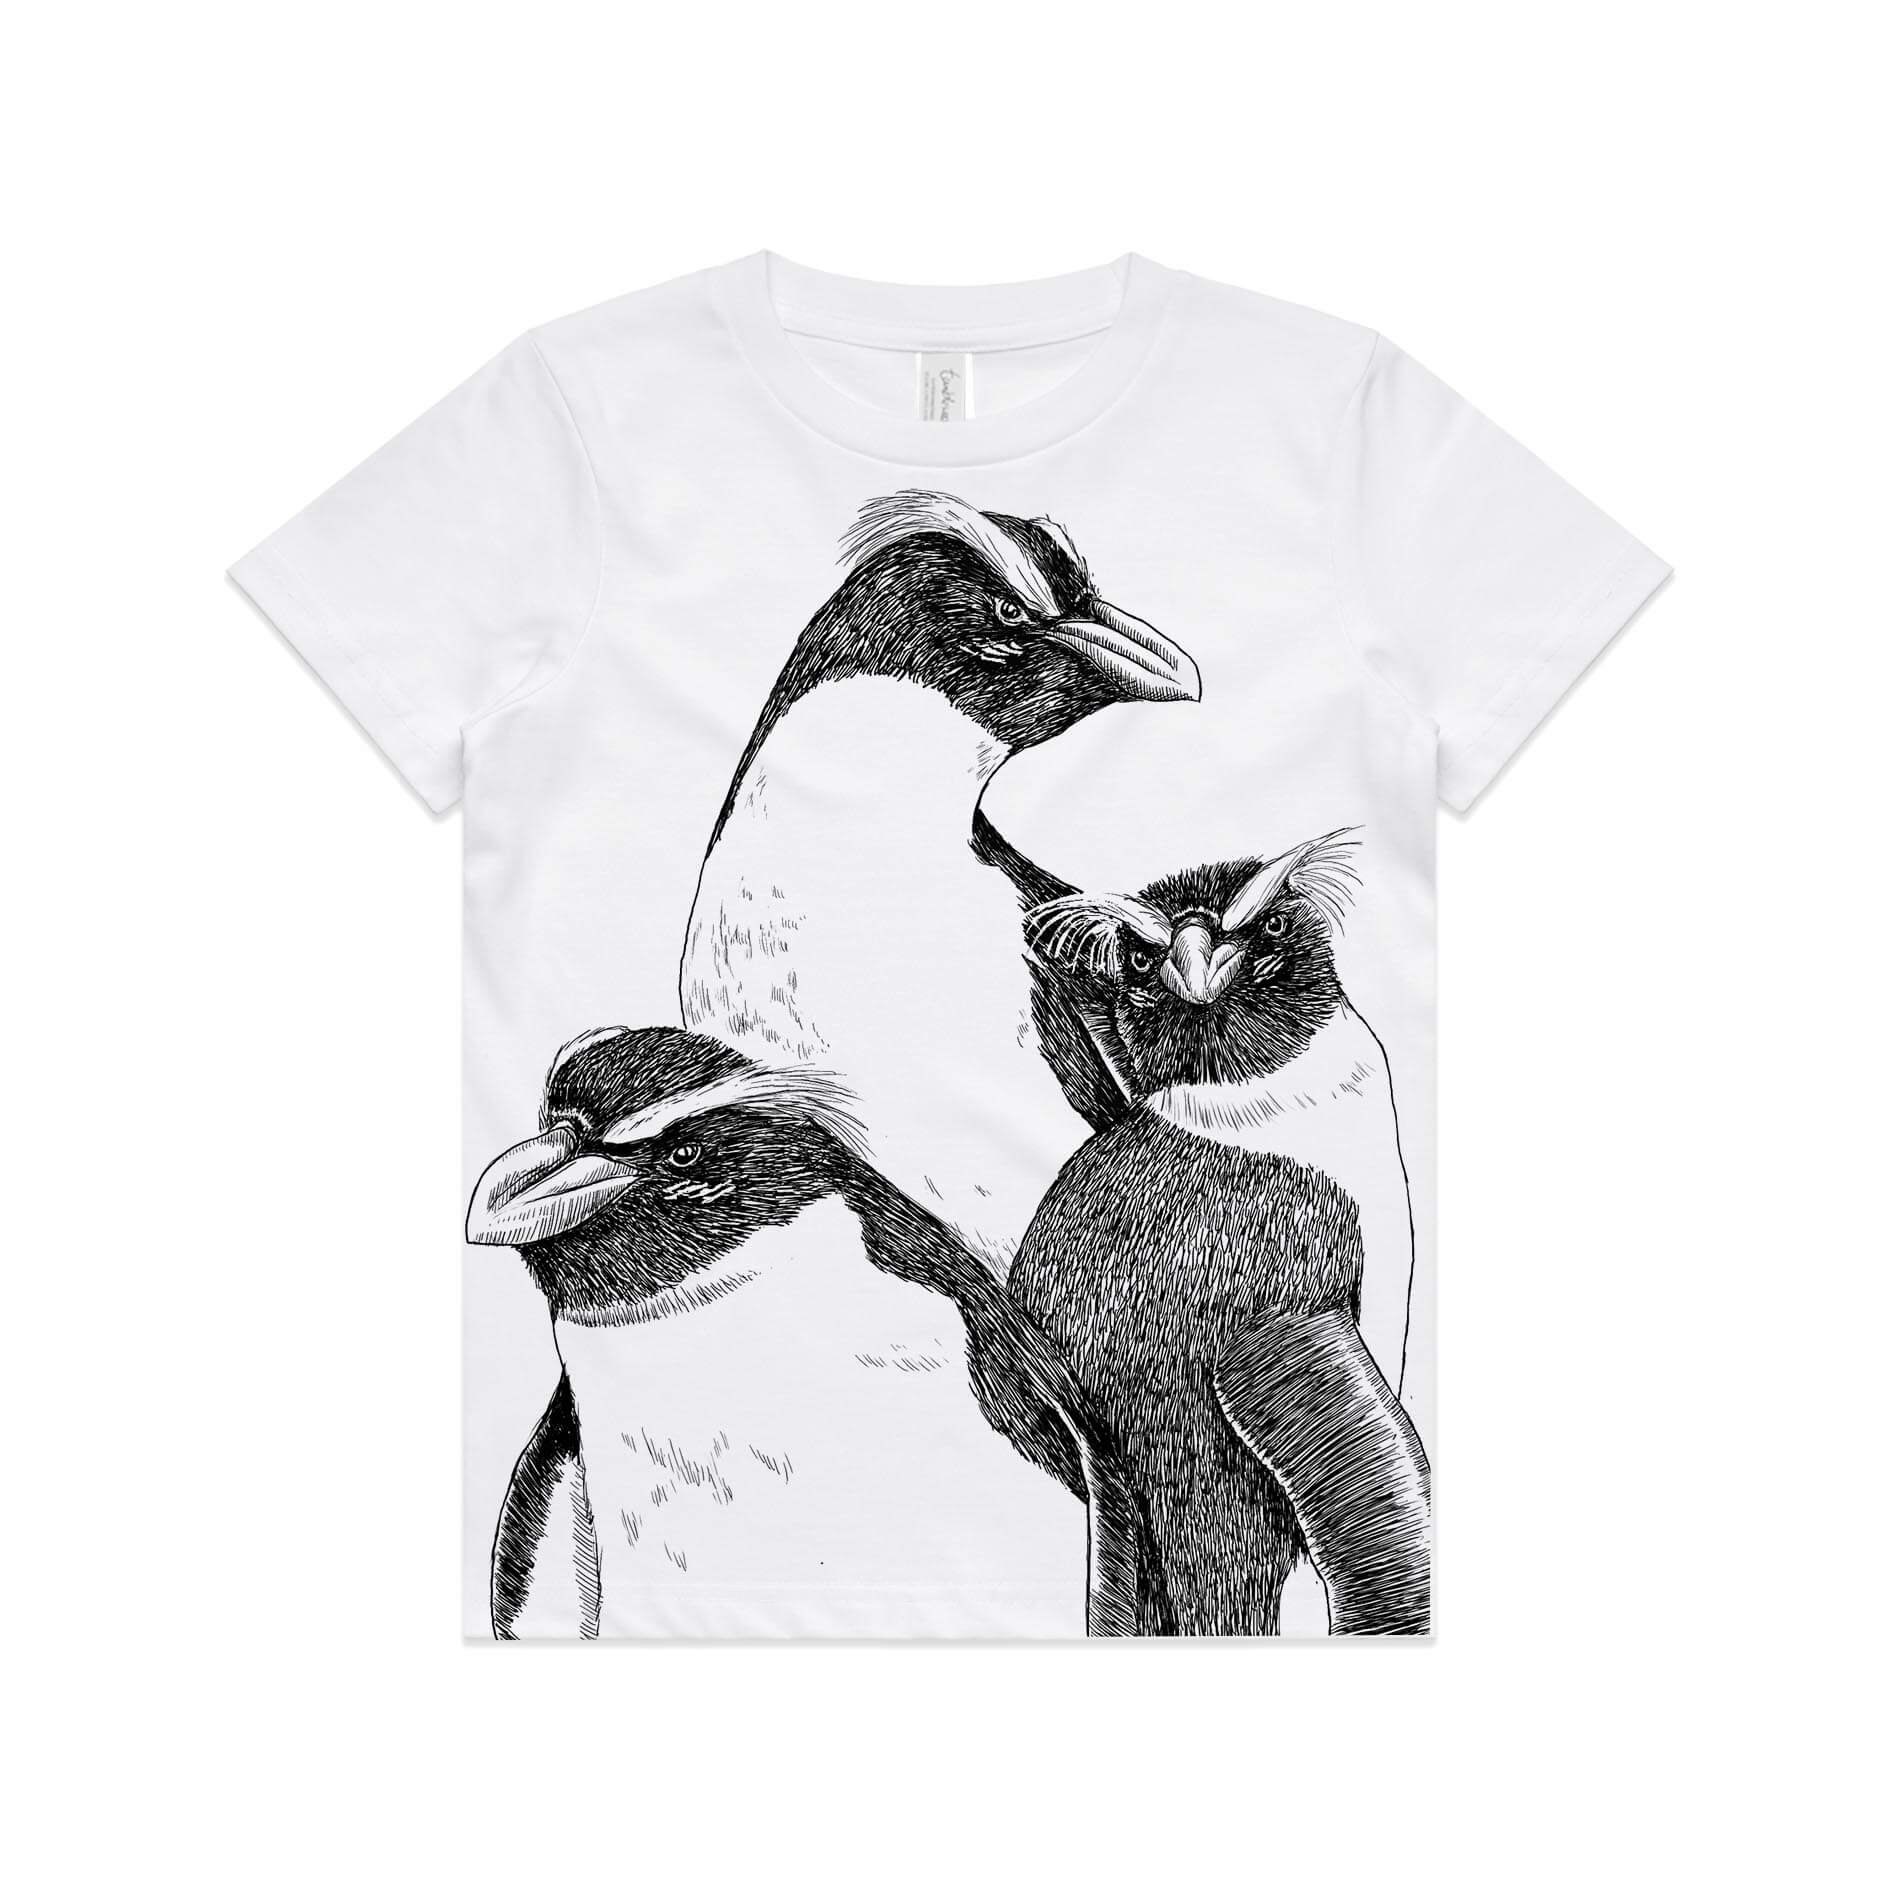 White, cotton kids' t-shirt with screen printed Kids tawaki/fiordland crested penguin design.